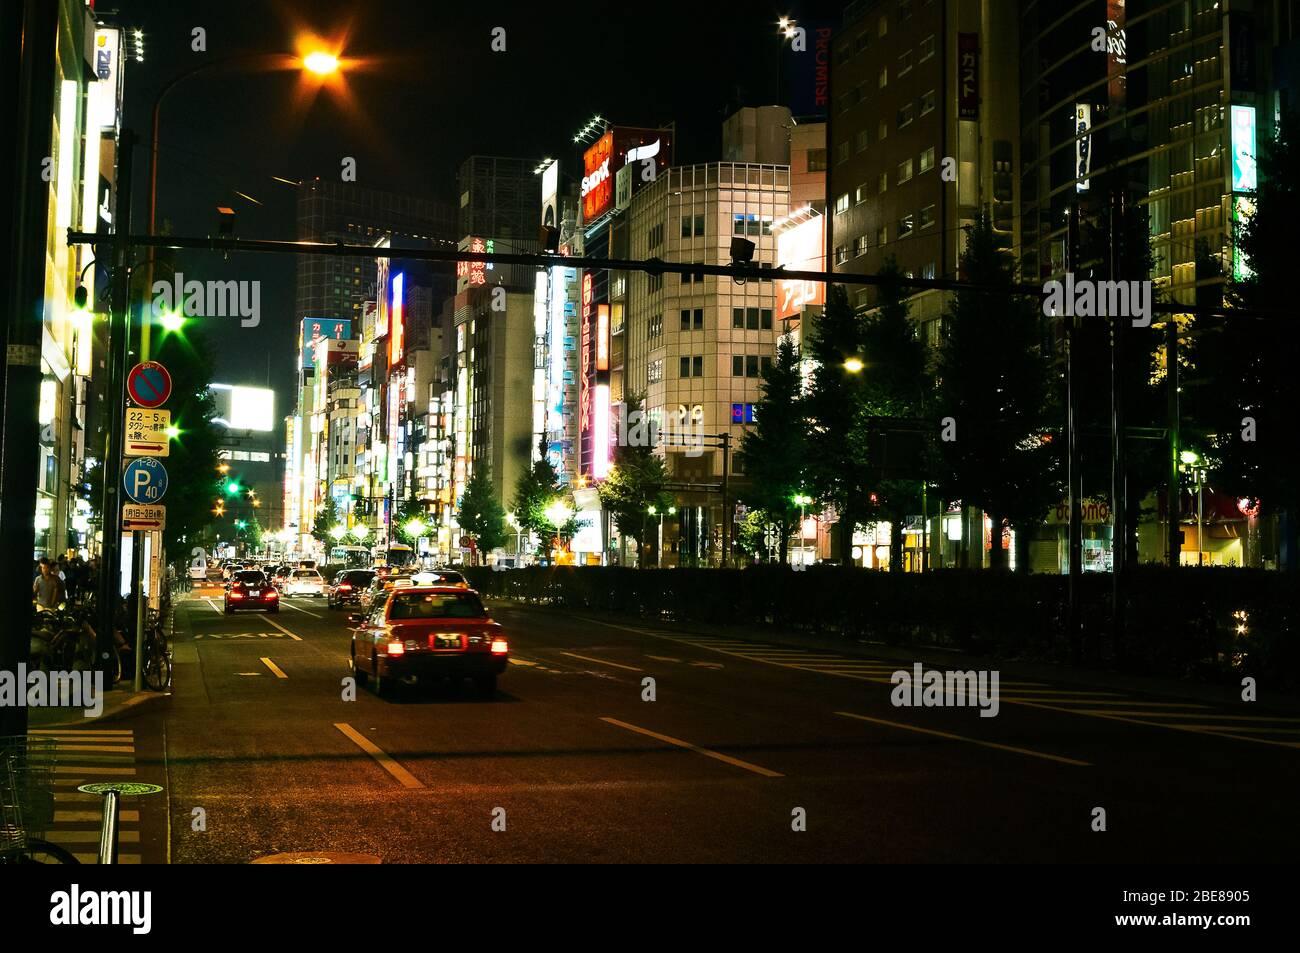 Night time Street scene showing the neon lighting of the Shinjuku